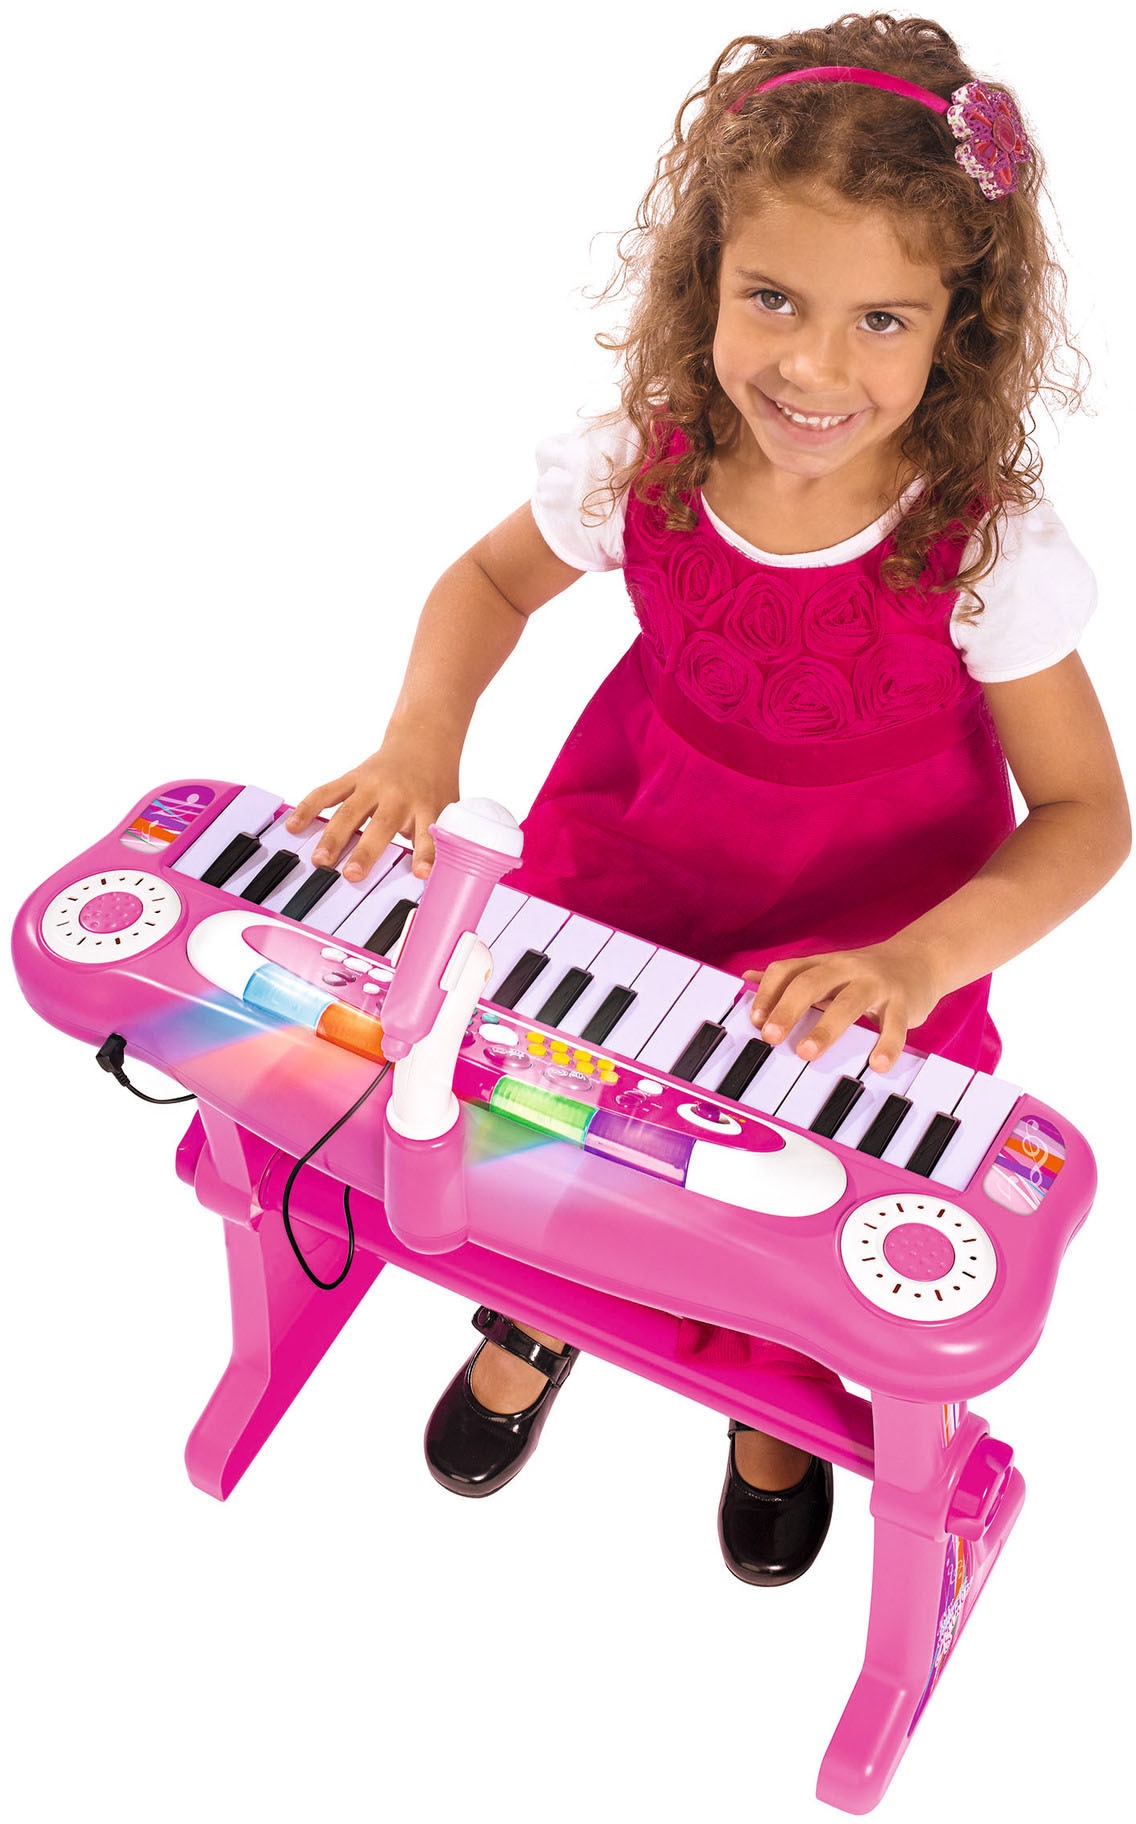 SIMBA Spielzeug-Musikinstrument »My Music World Keyboard, pink«, mit Hocker und Mikrofon